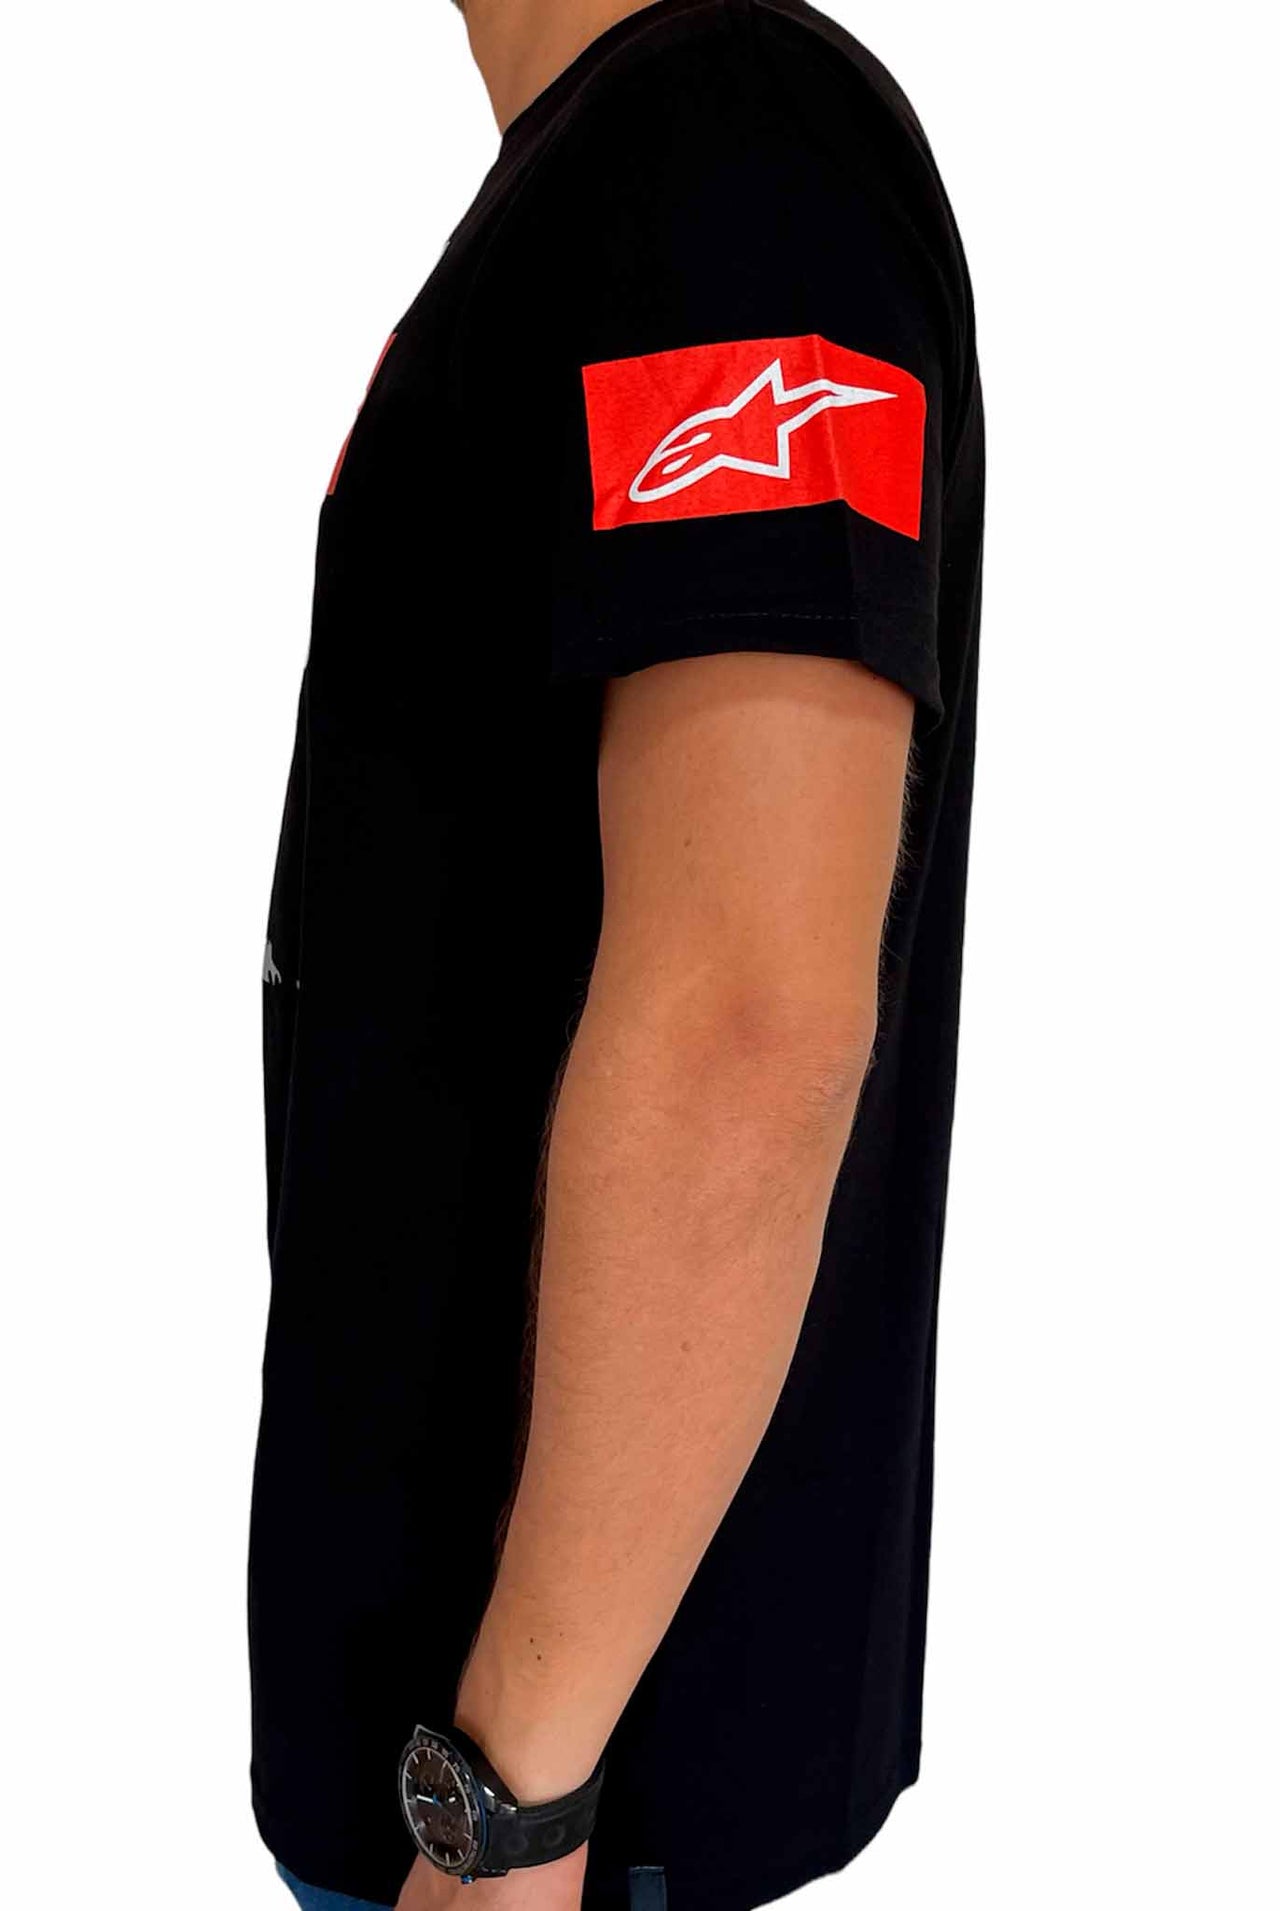 Camiseta Alpinestar Tactical Tee Black